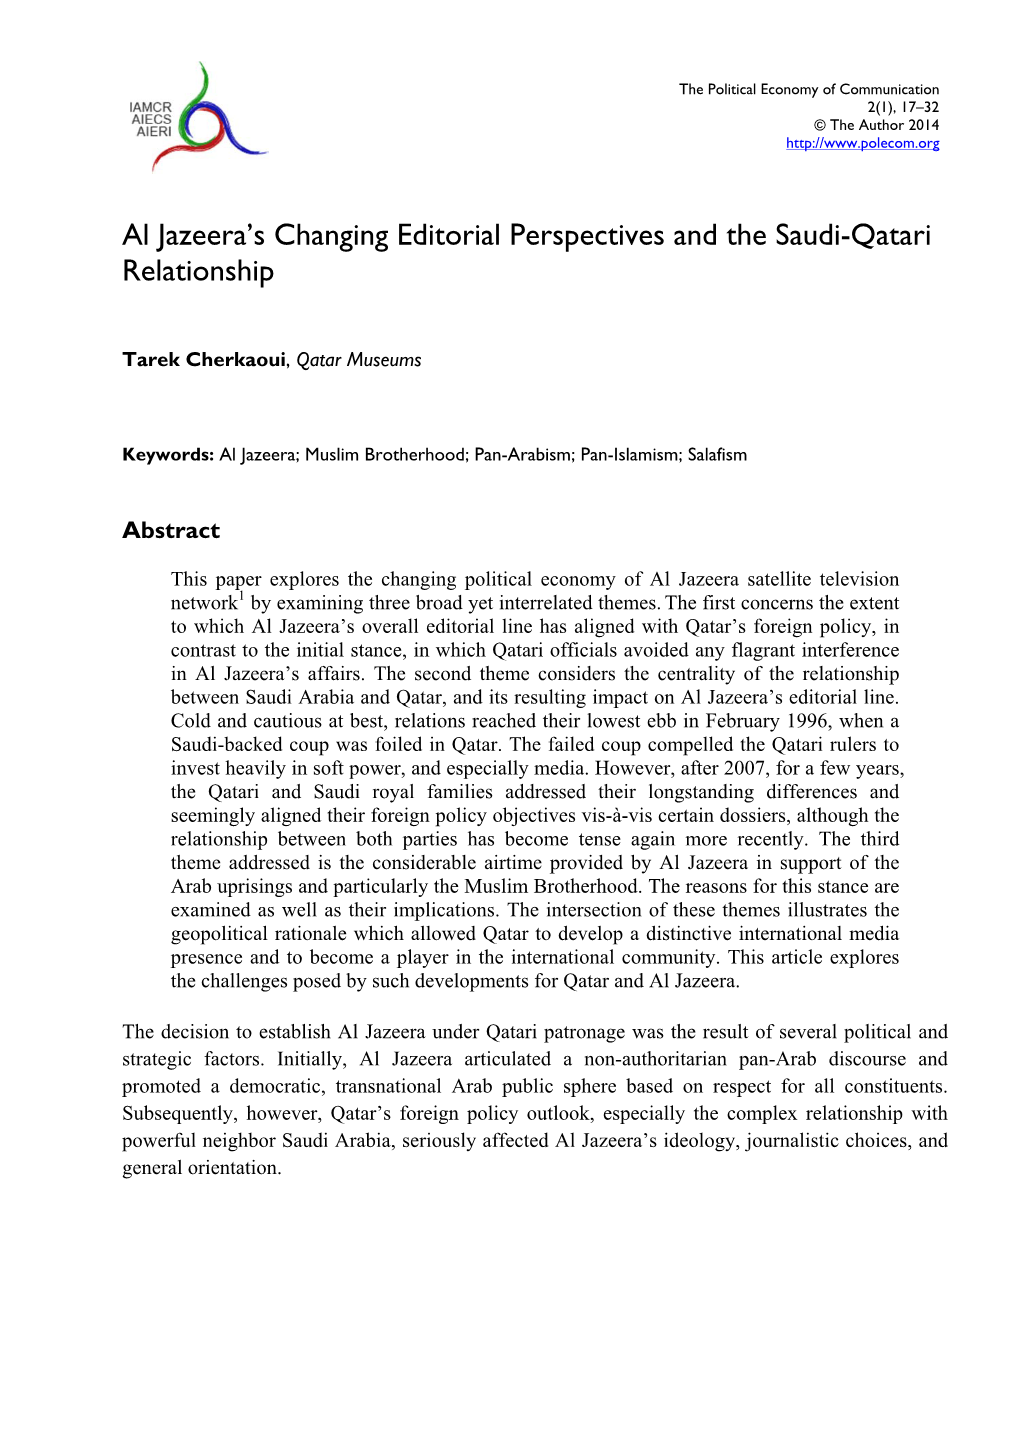 Al Jazeera's Changing Editorial Perspectives and the Saudi-Qatari